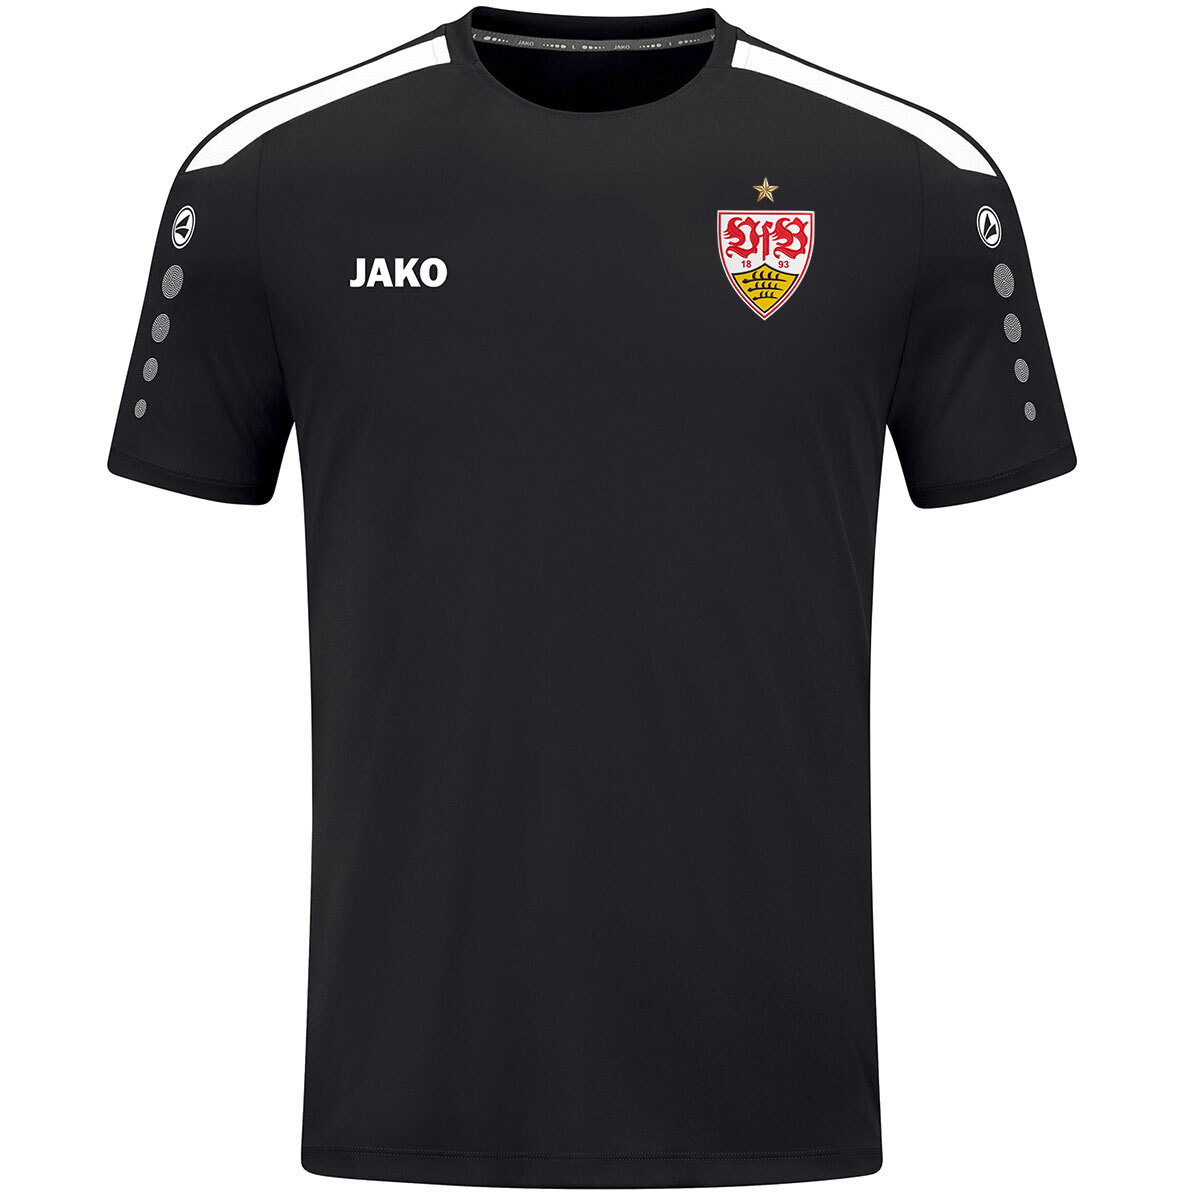 Jako VfB Stuttgart T-Shirt Power